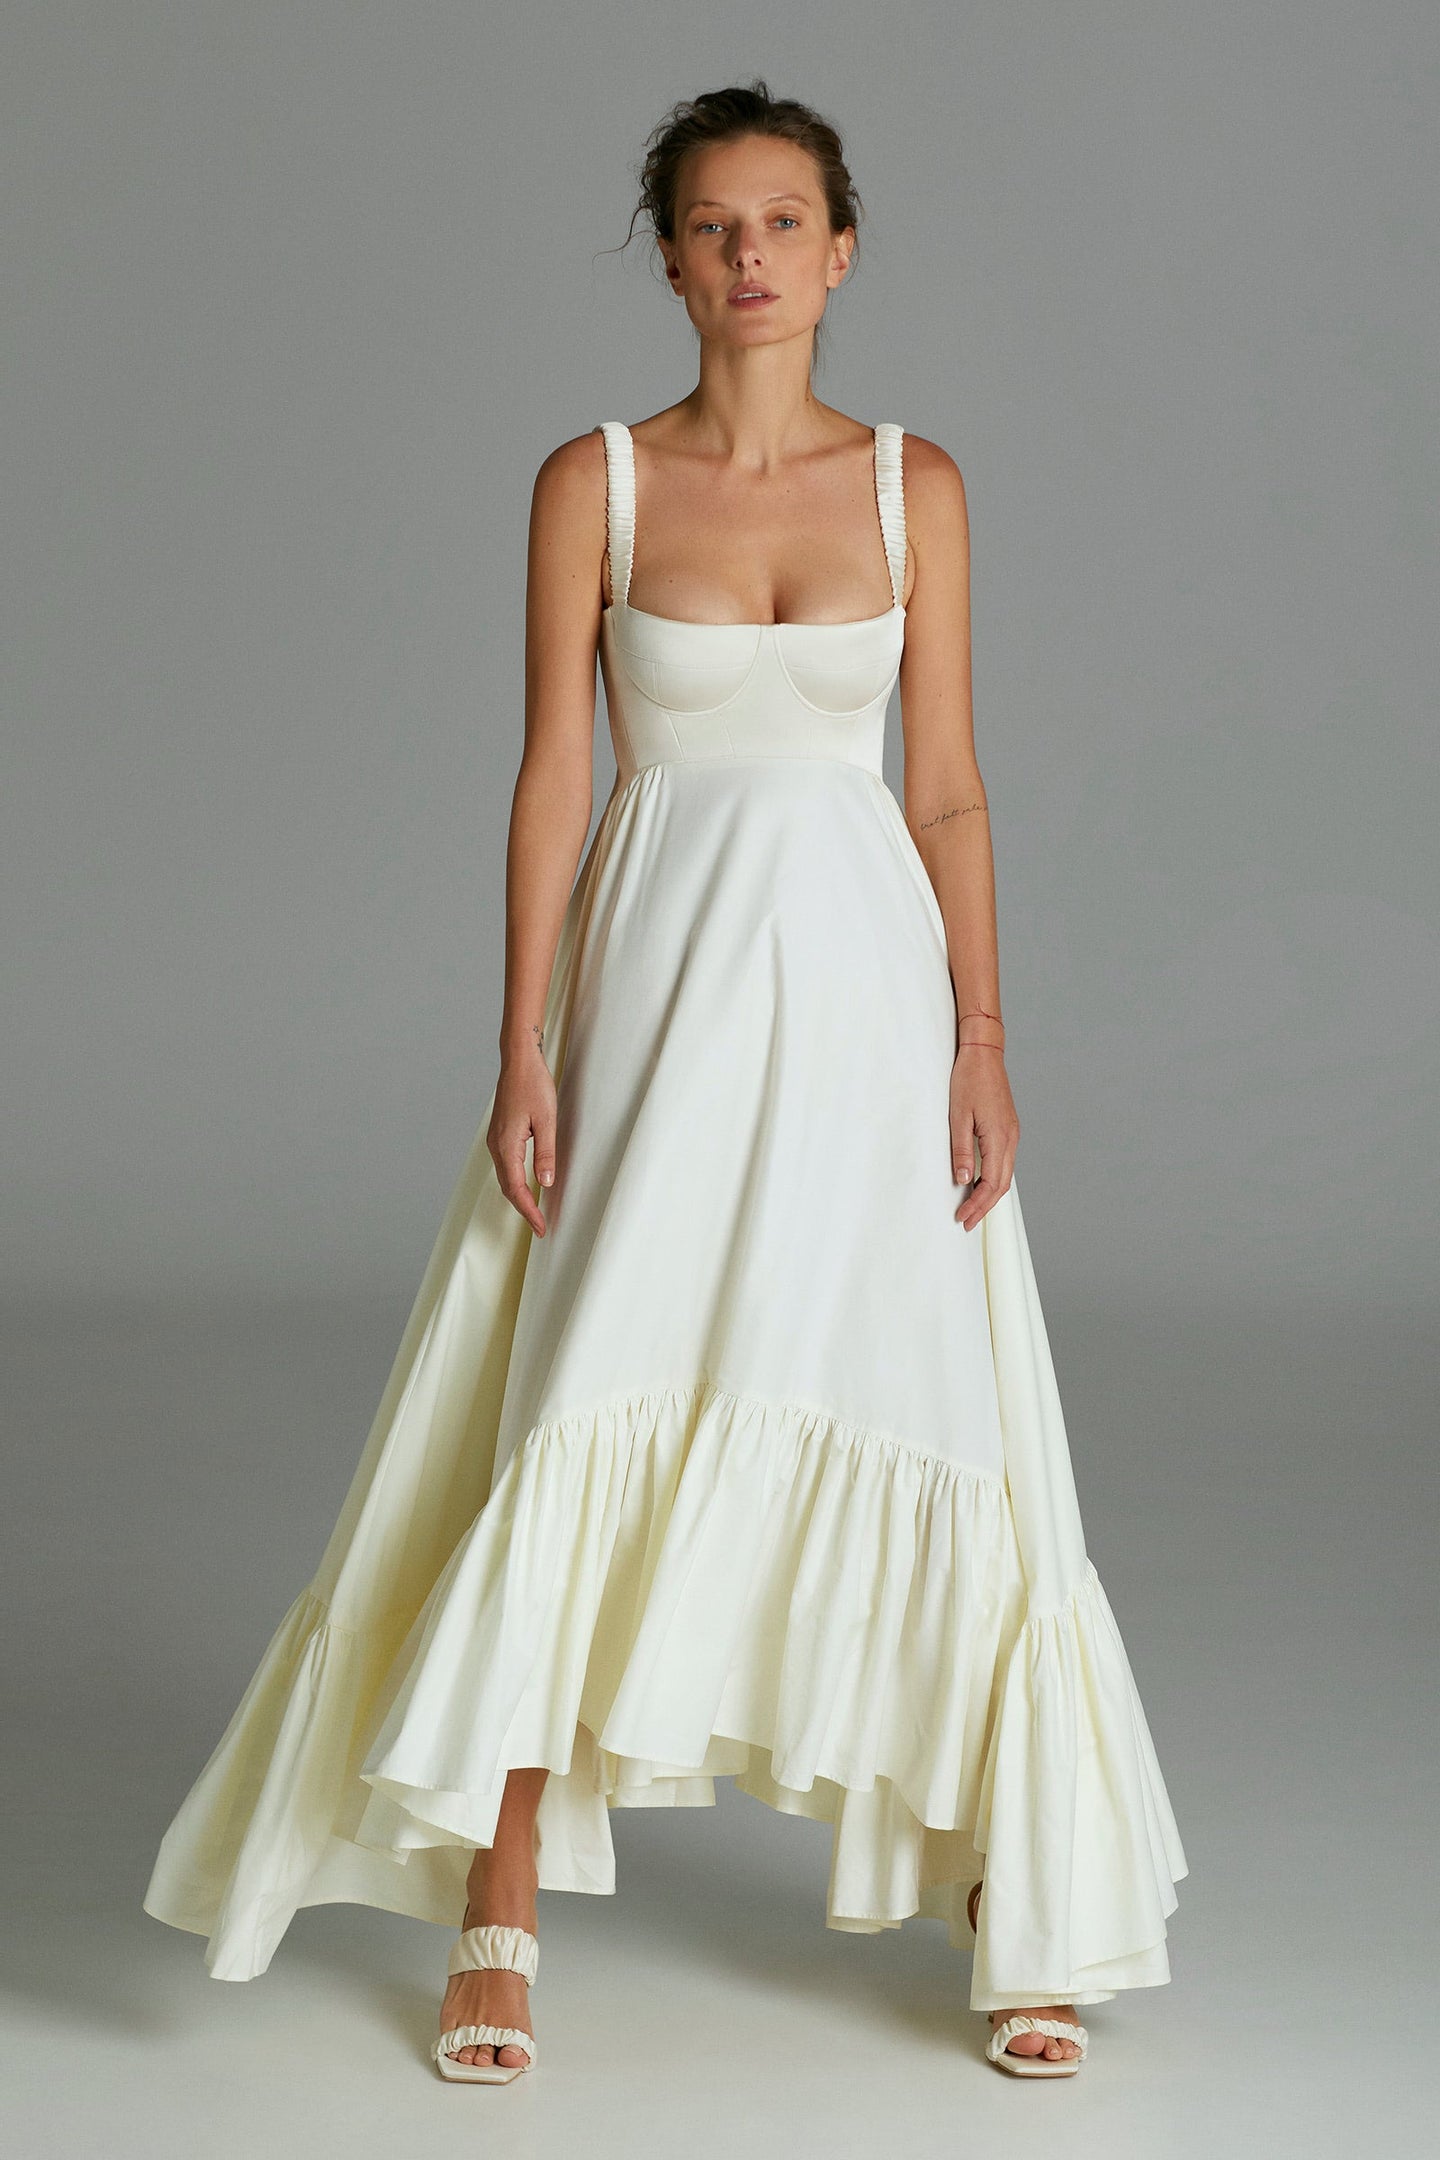 Model in white Snowdrop dress